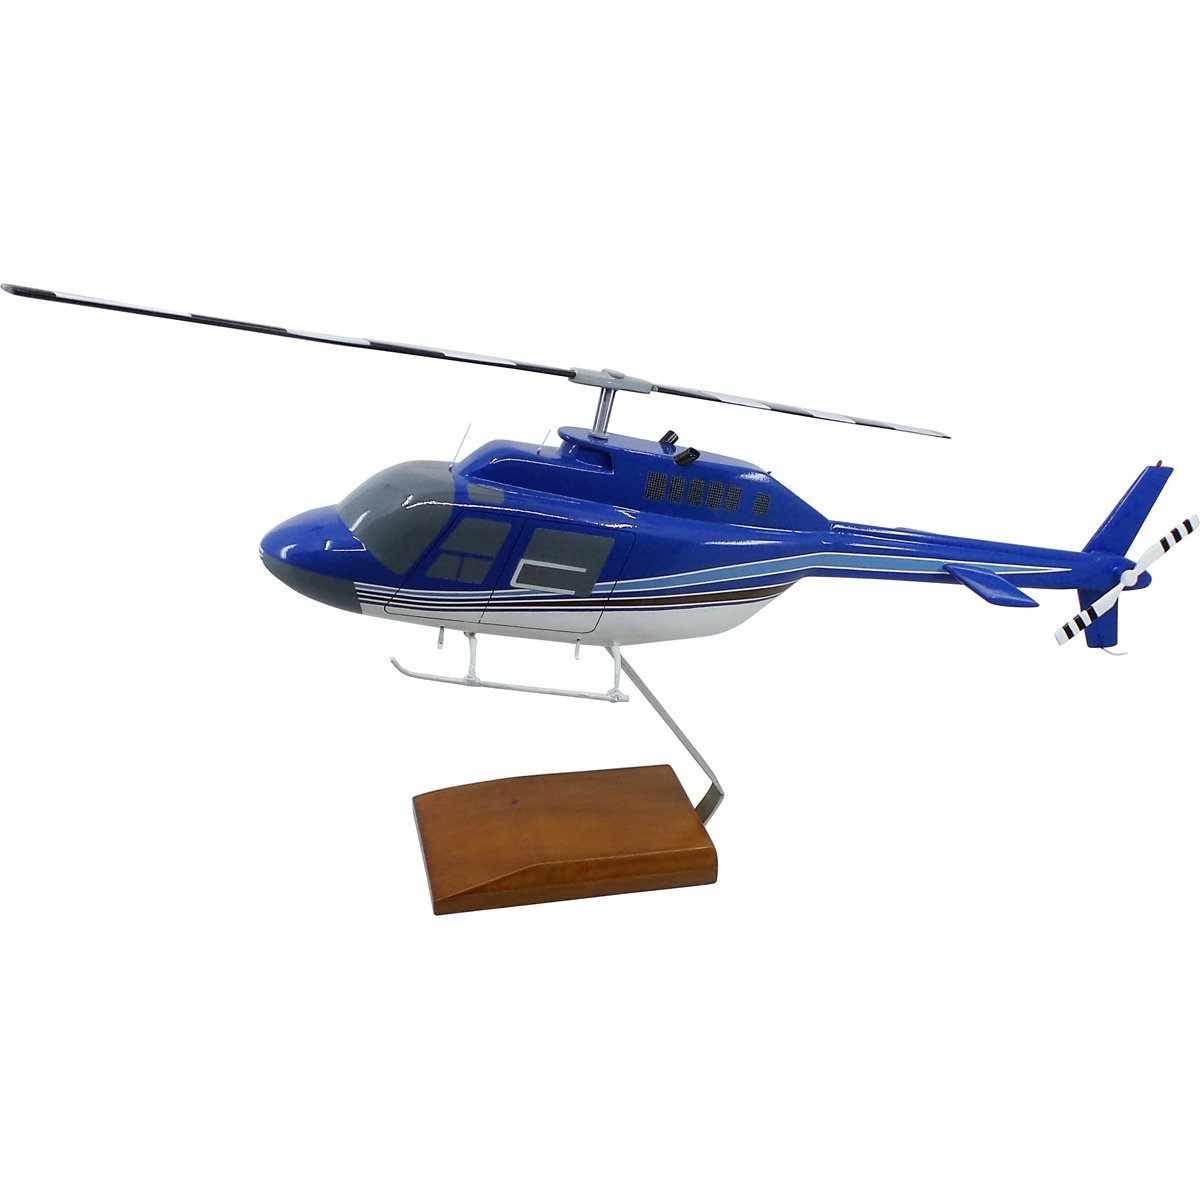 Bell 206 JetRanger Limited Edition Large Mahogany Model